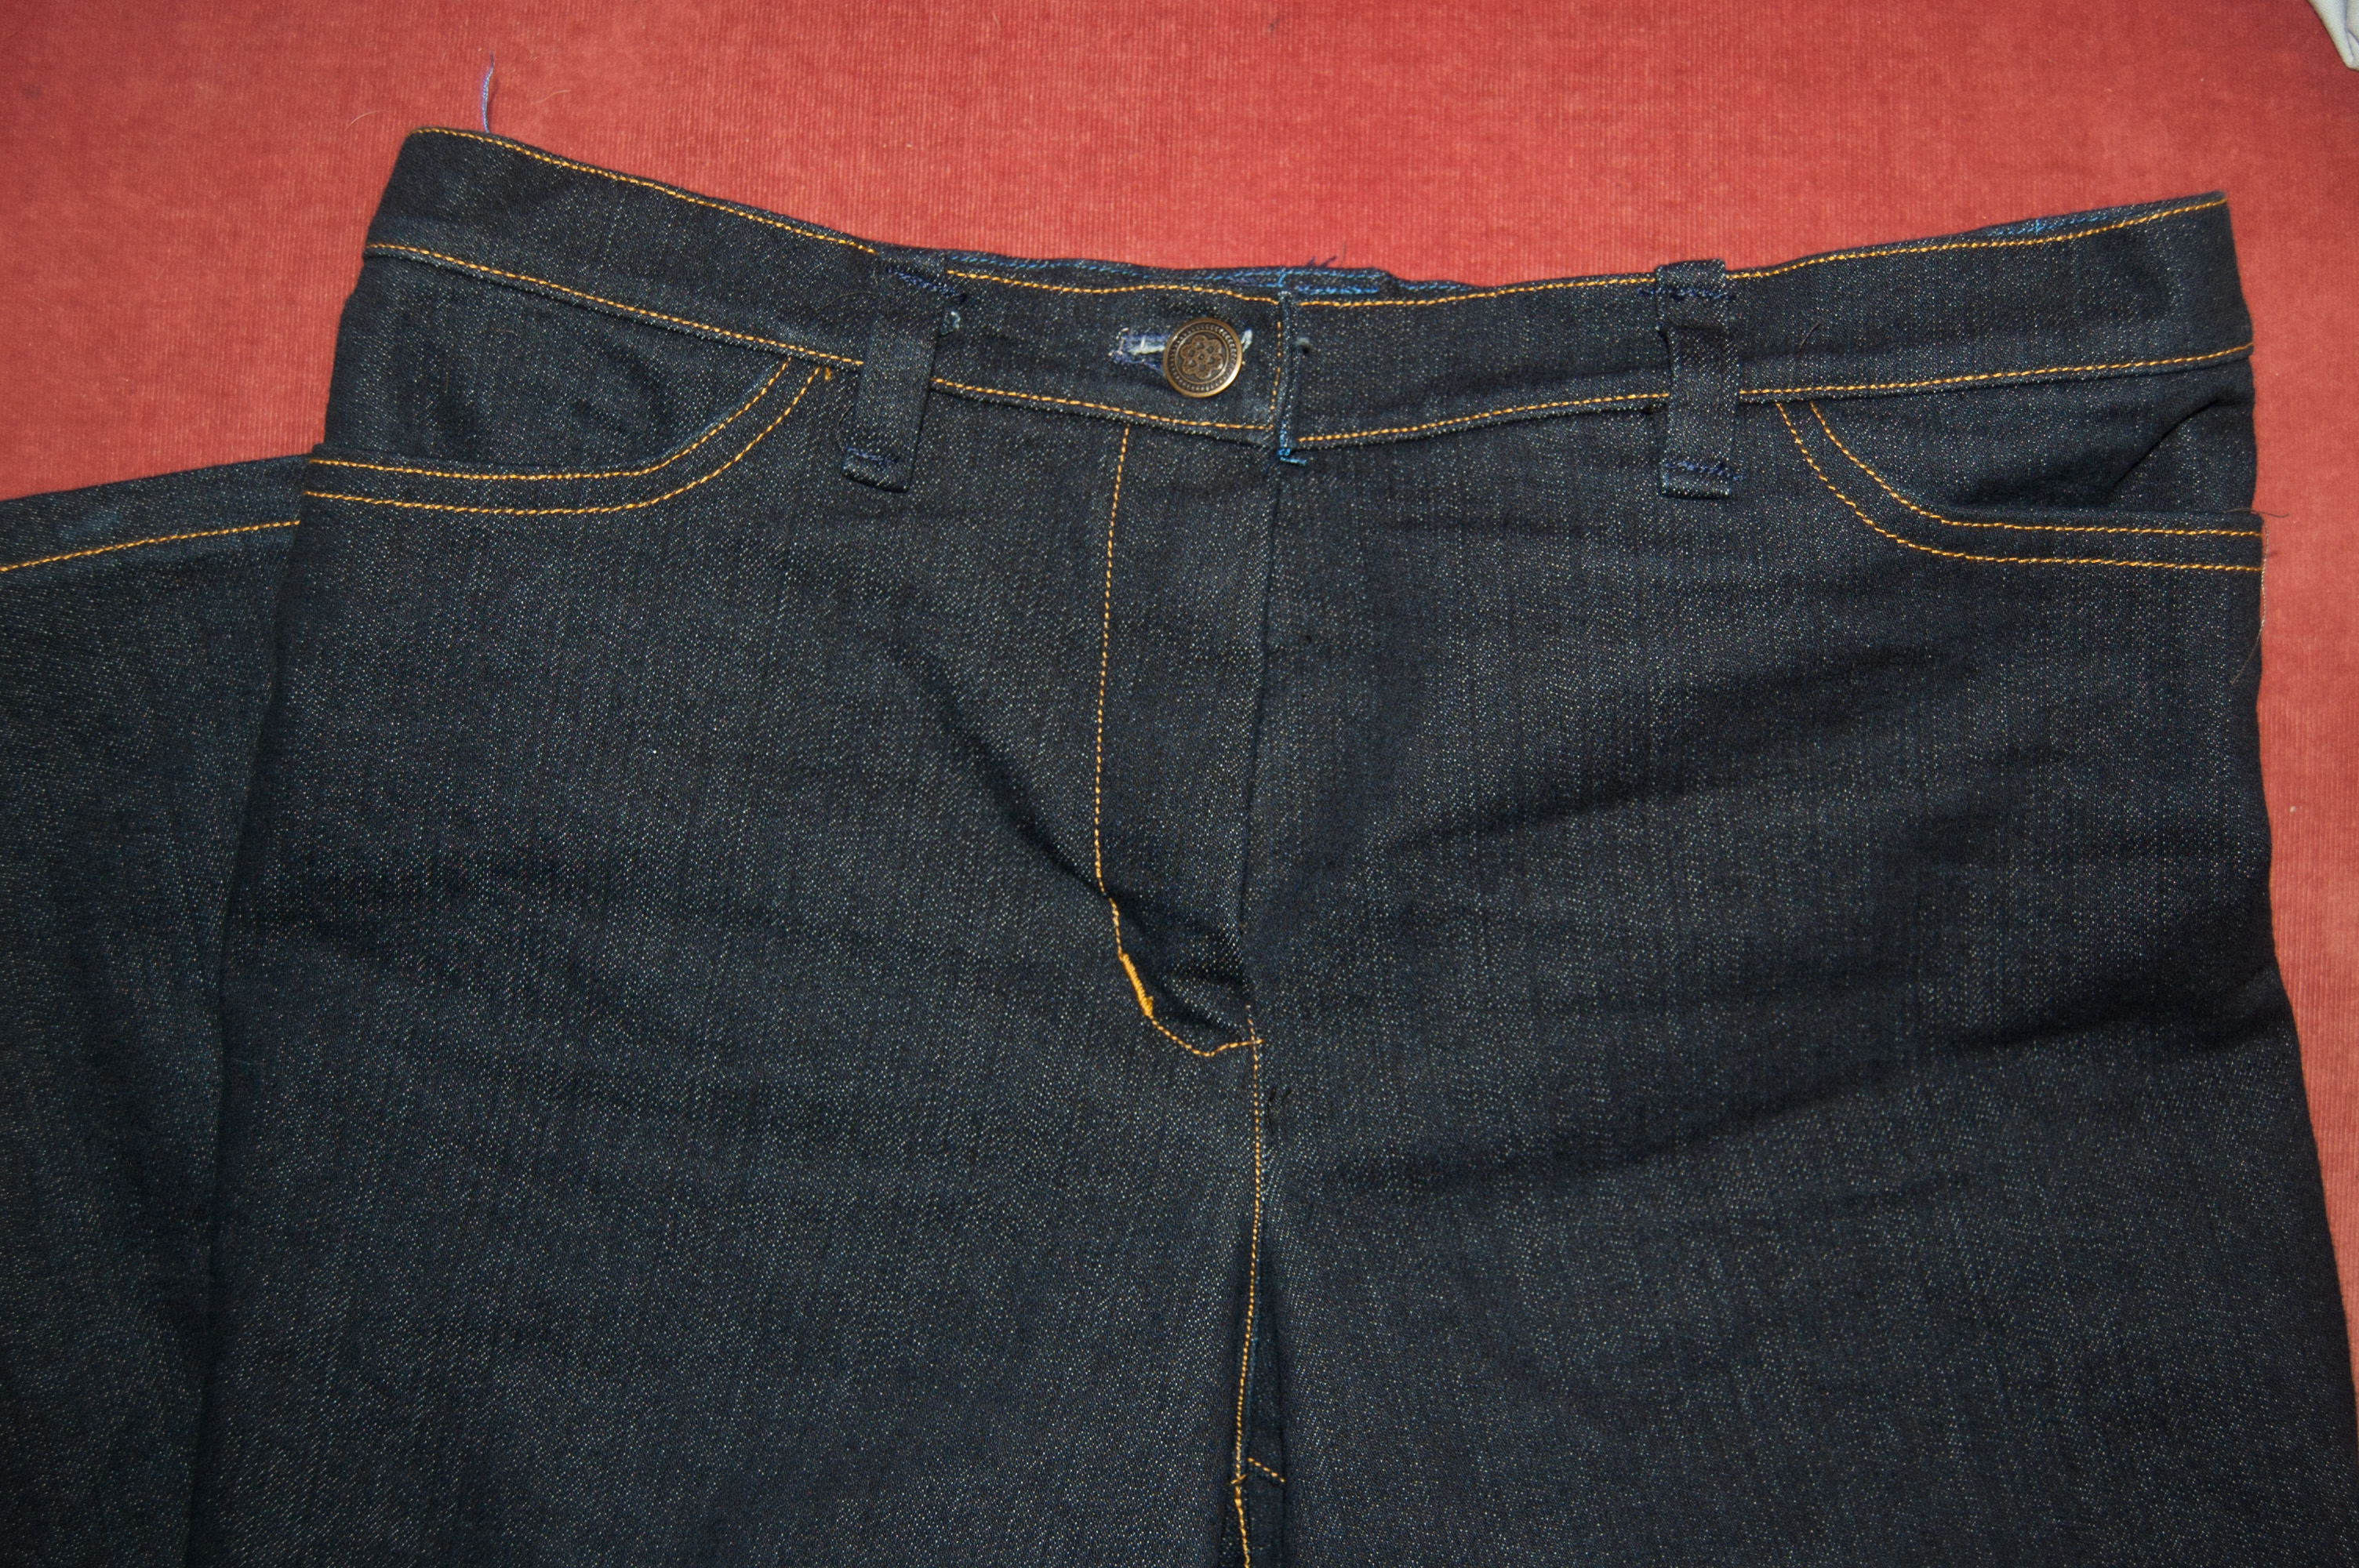 Installing Jean Belt loops, Hemming Jeans & Sewing Buttonhole